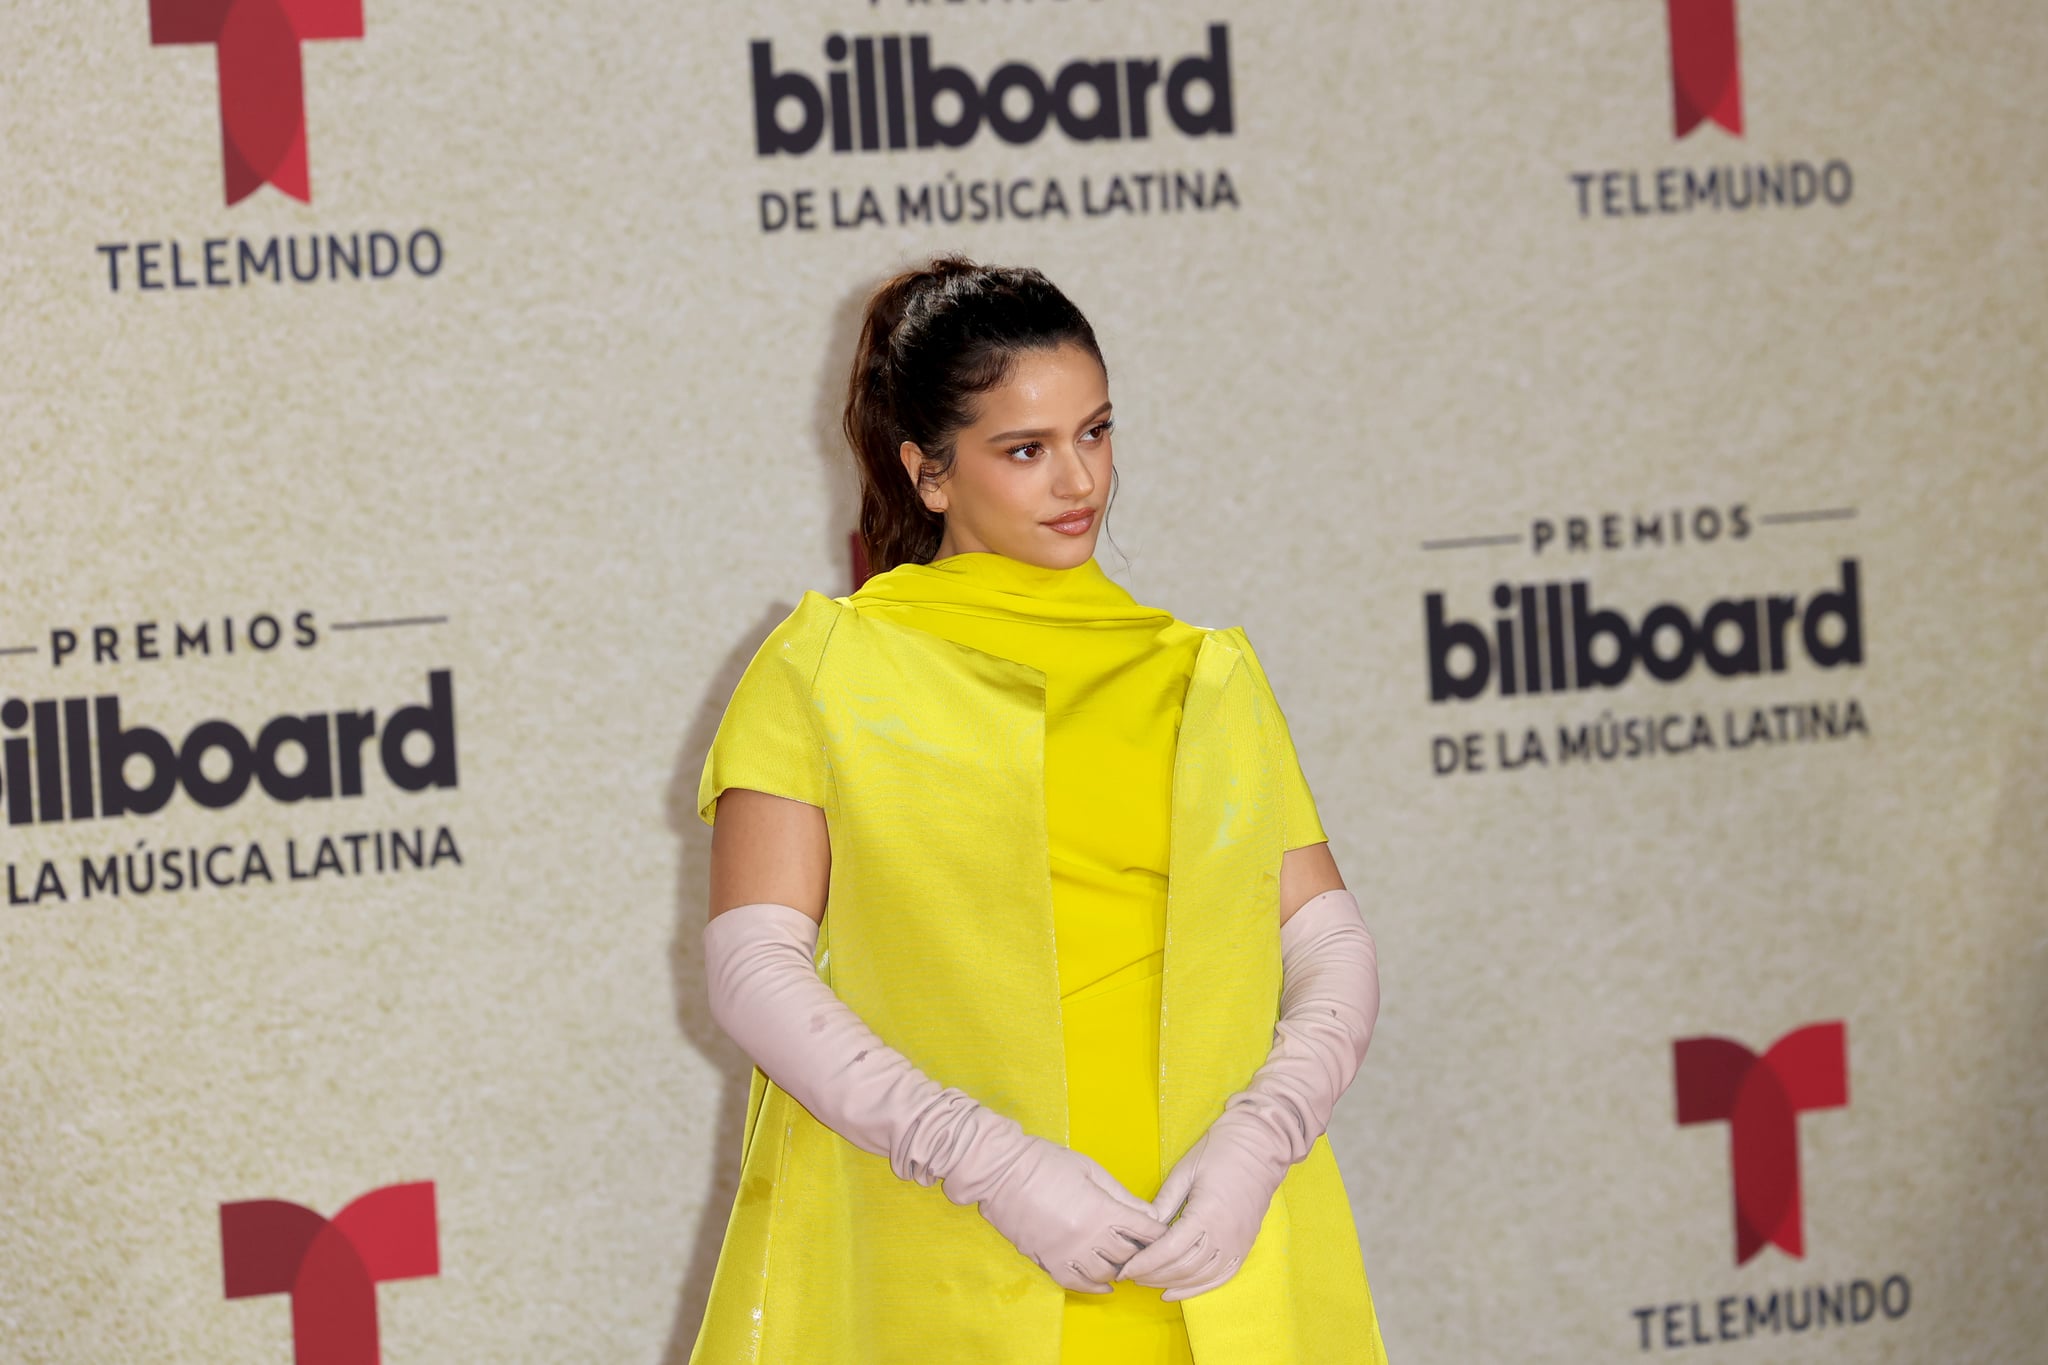 Rosalia seen wearing a yellow R. Simons oversized pullover dress